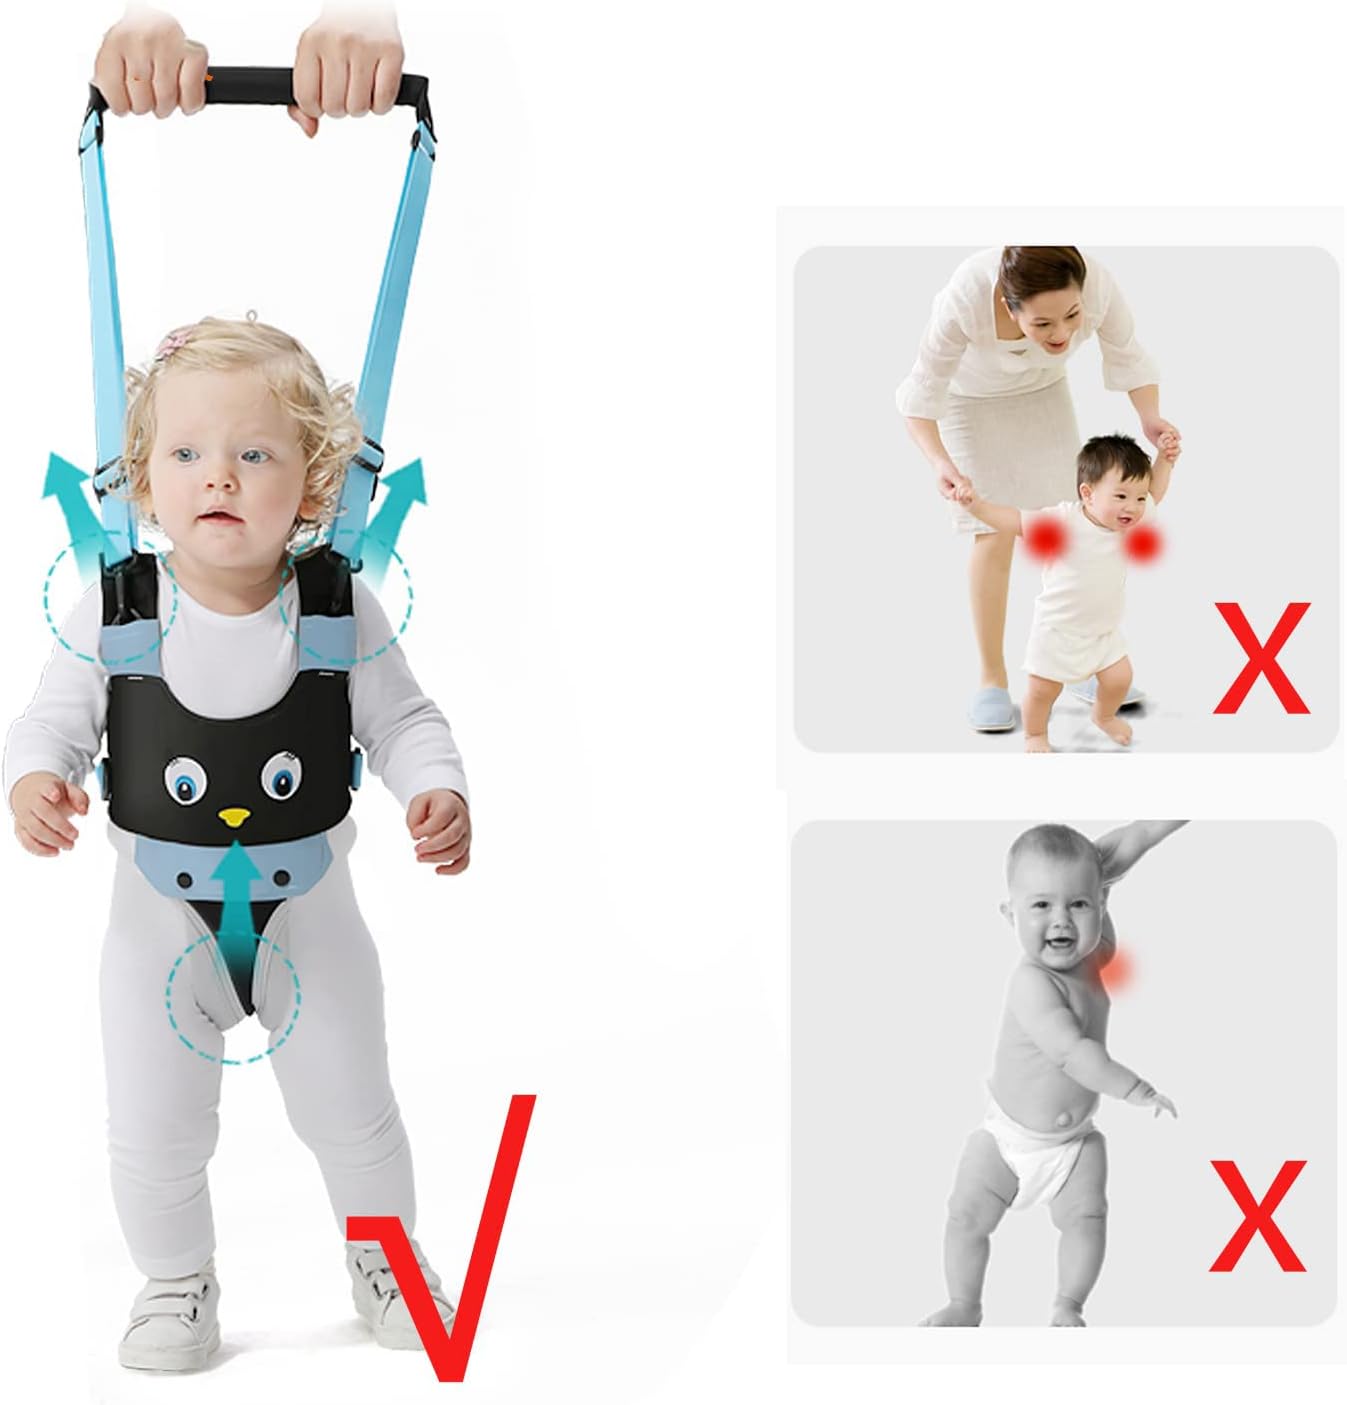 Handheld Baby Walker,Toddler Walking Harness Assistant,Handheld Walk Helper Babies,Safety Harnesses Breathable Help Stand Up&Walk Learning Helper for 7-24 Month Infant (Blue)